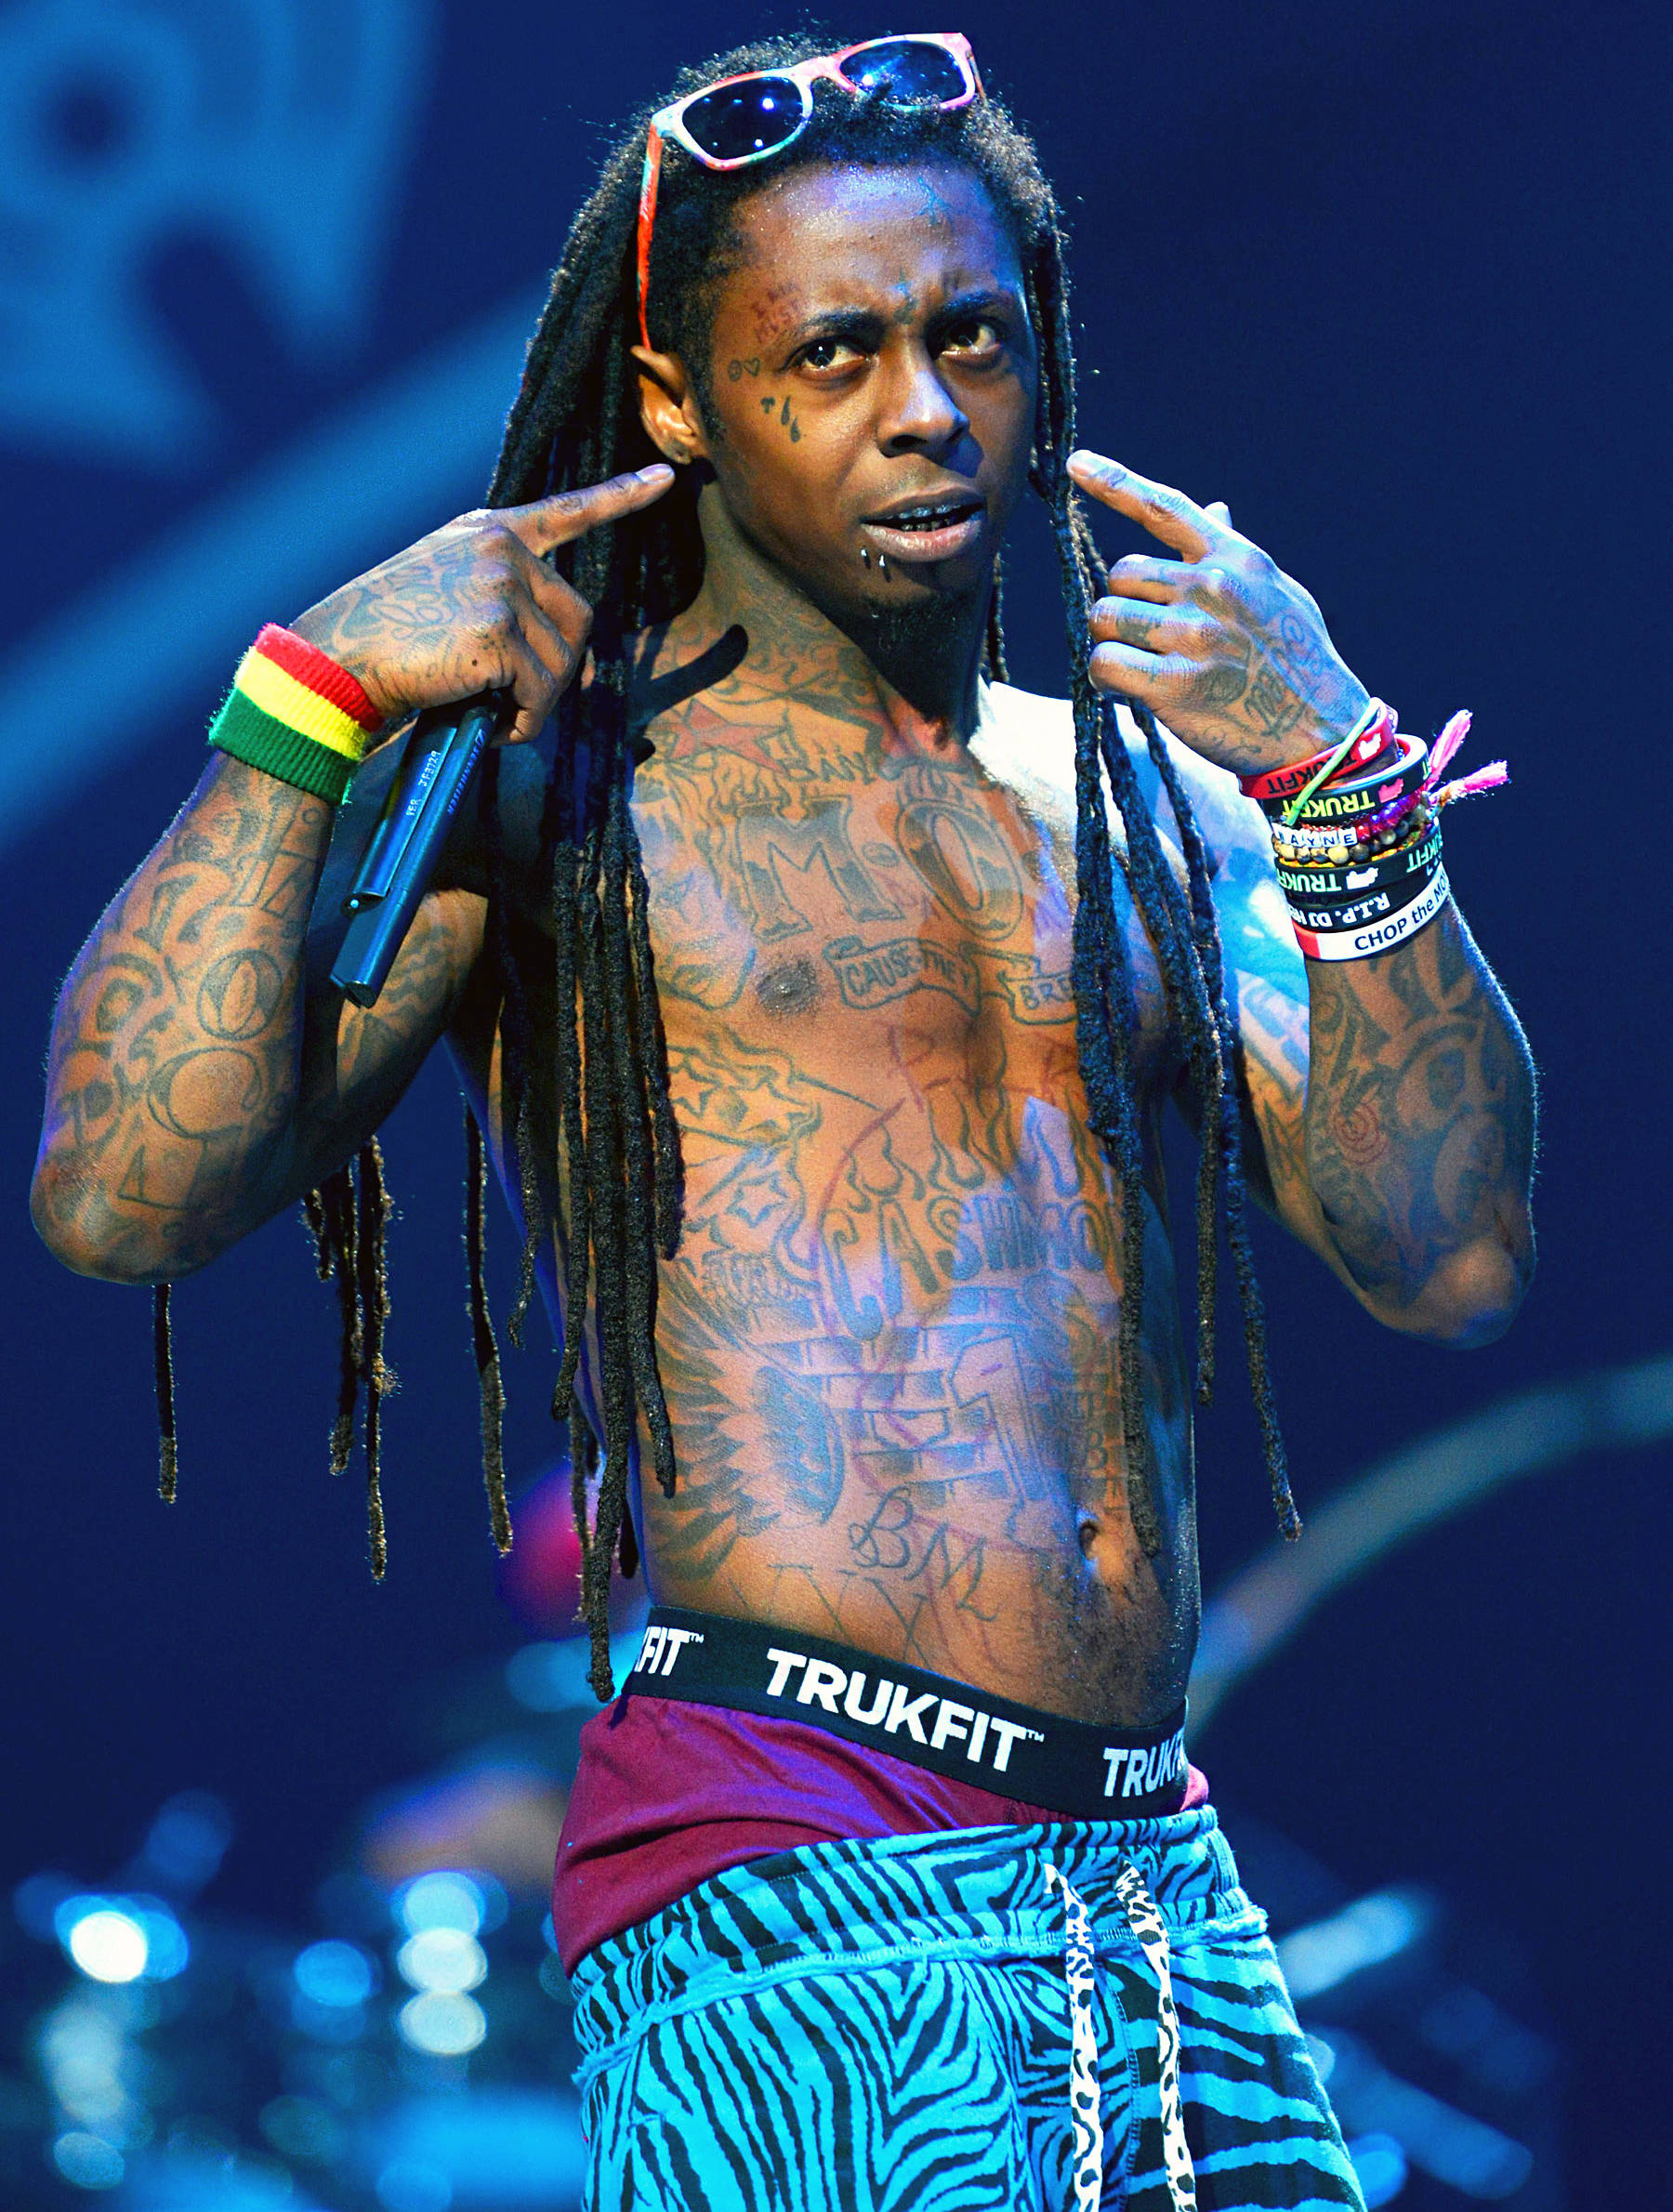 Download Lil Wayne Trunks Wallpaper